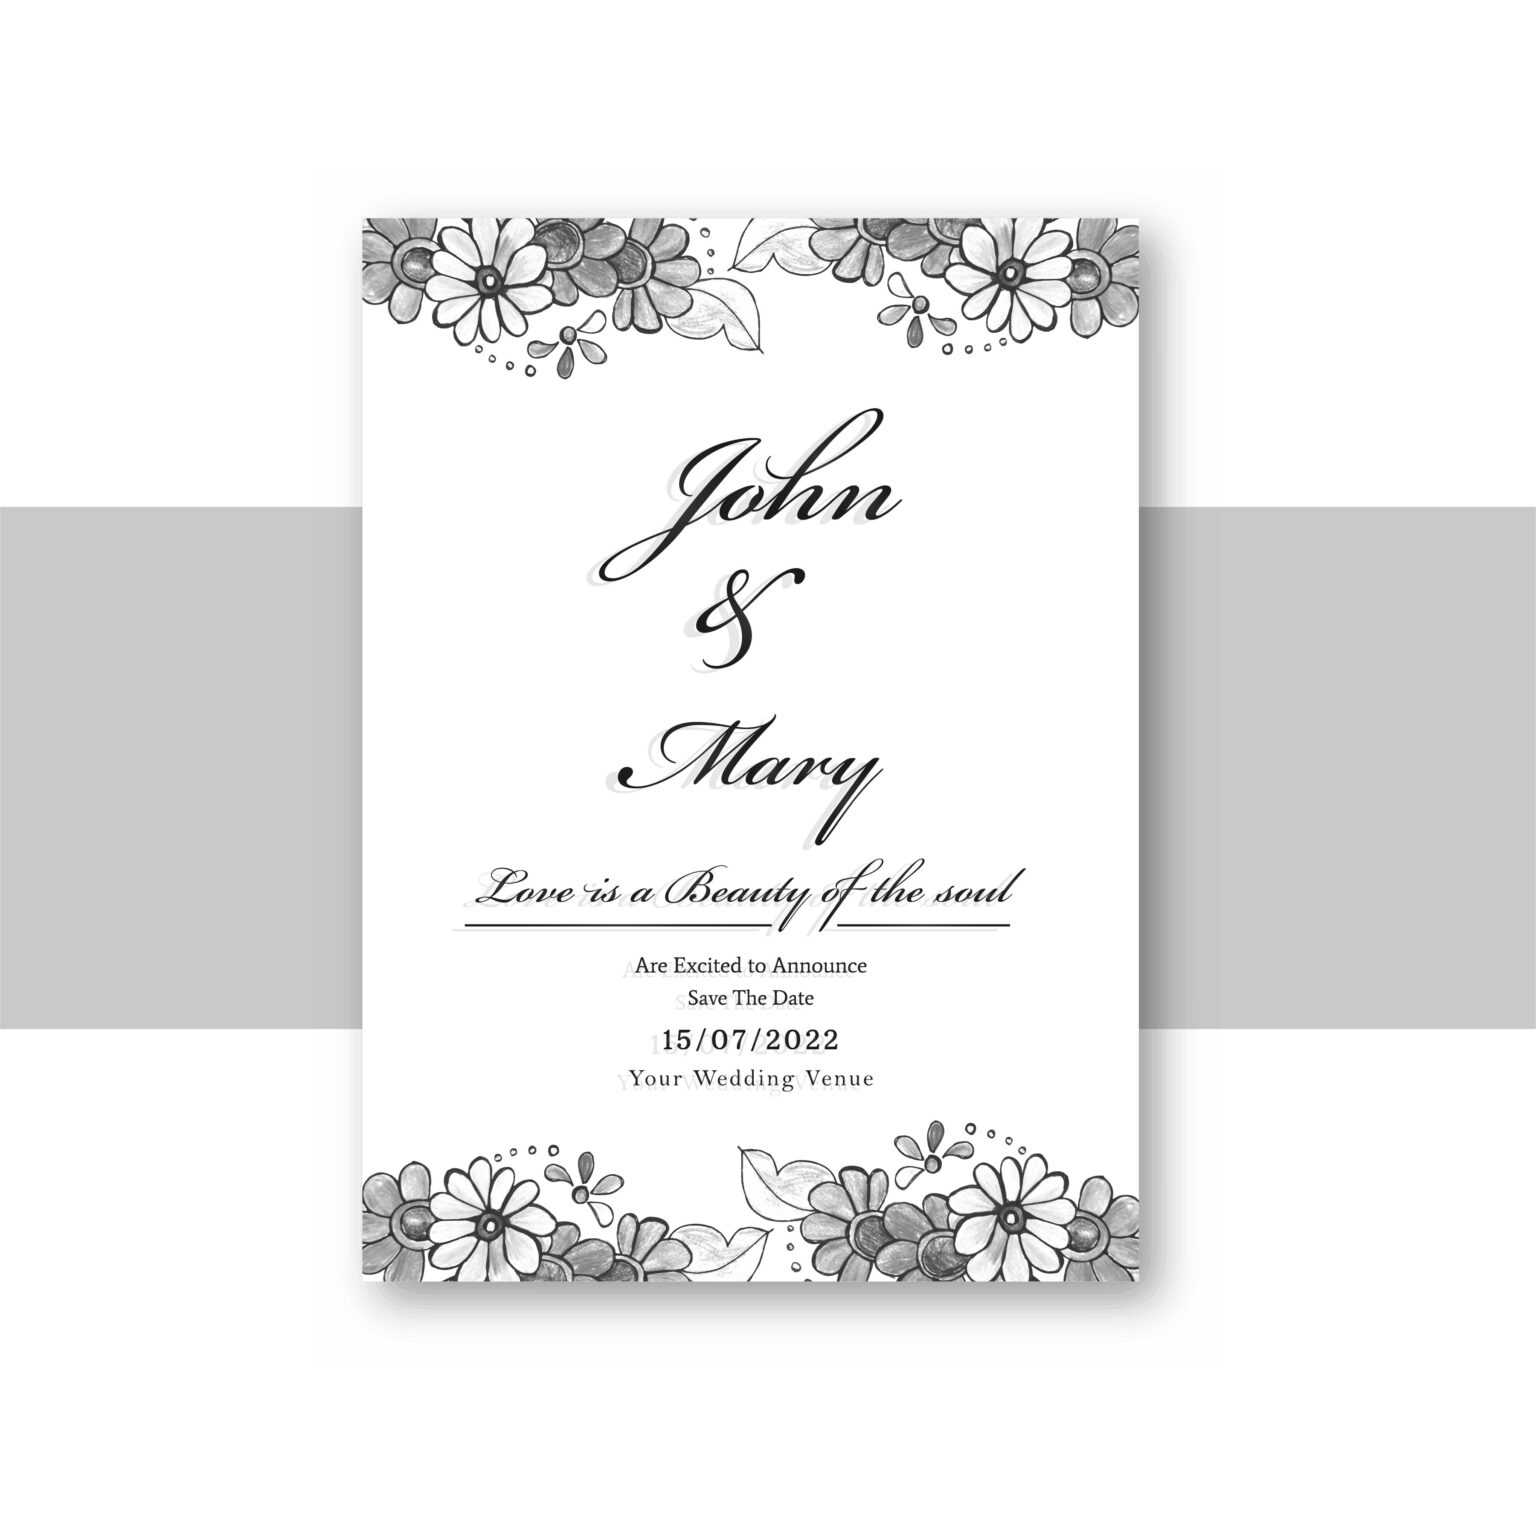 Golden Wedding Invitation Card Template Regarding Invitation Cards Templates For Marriage 2027